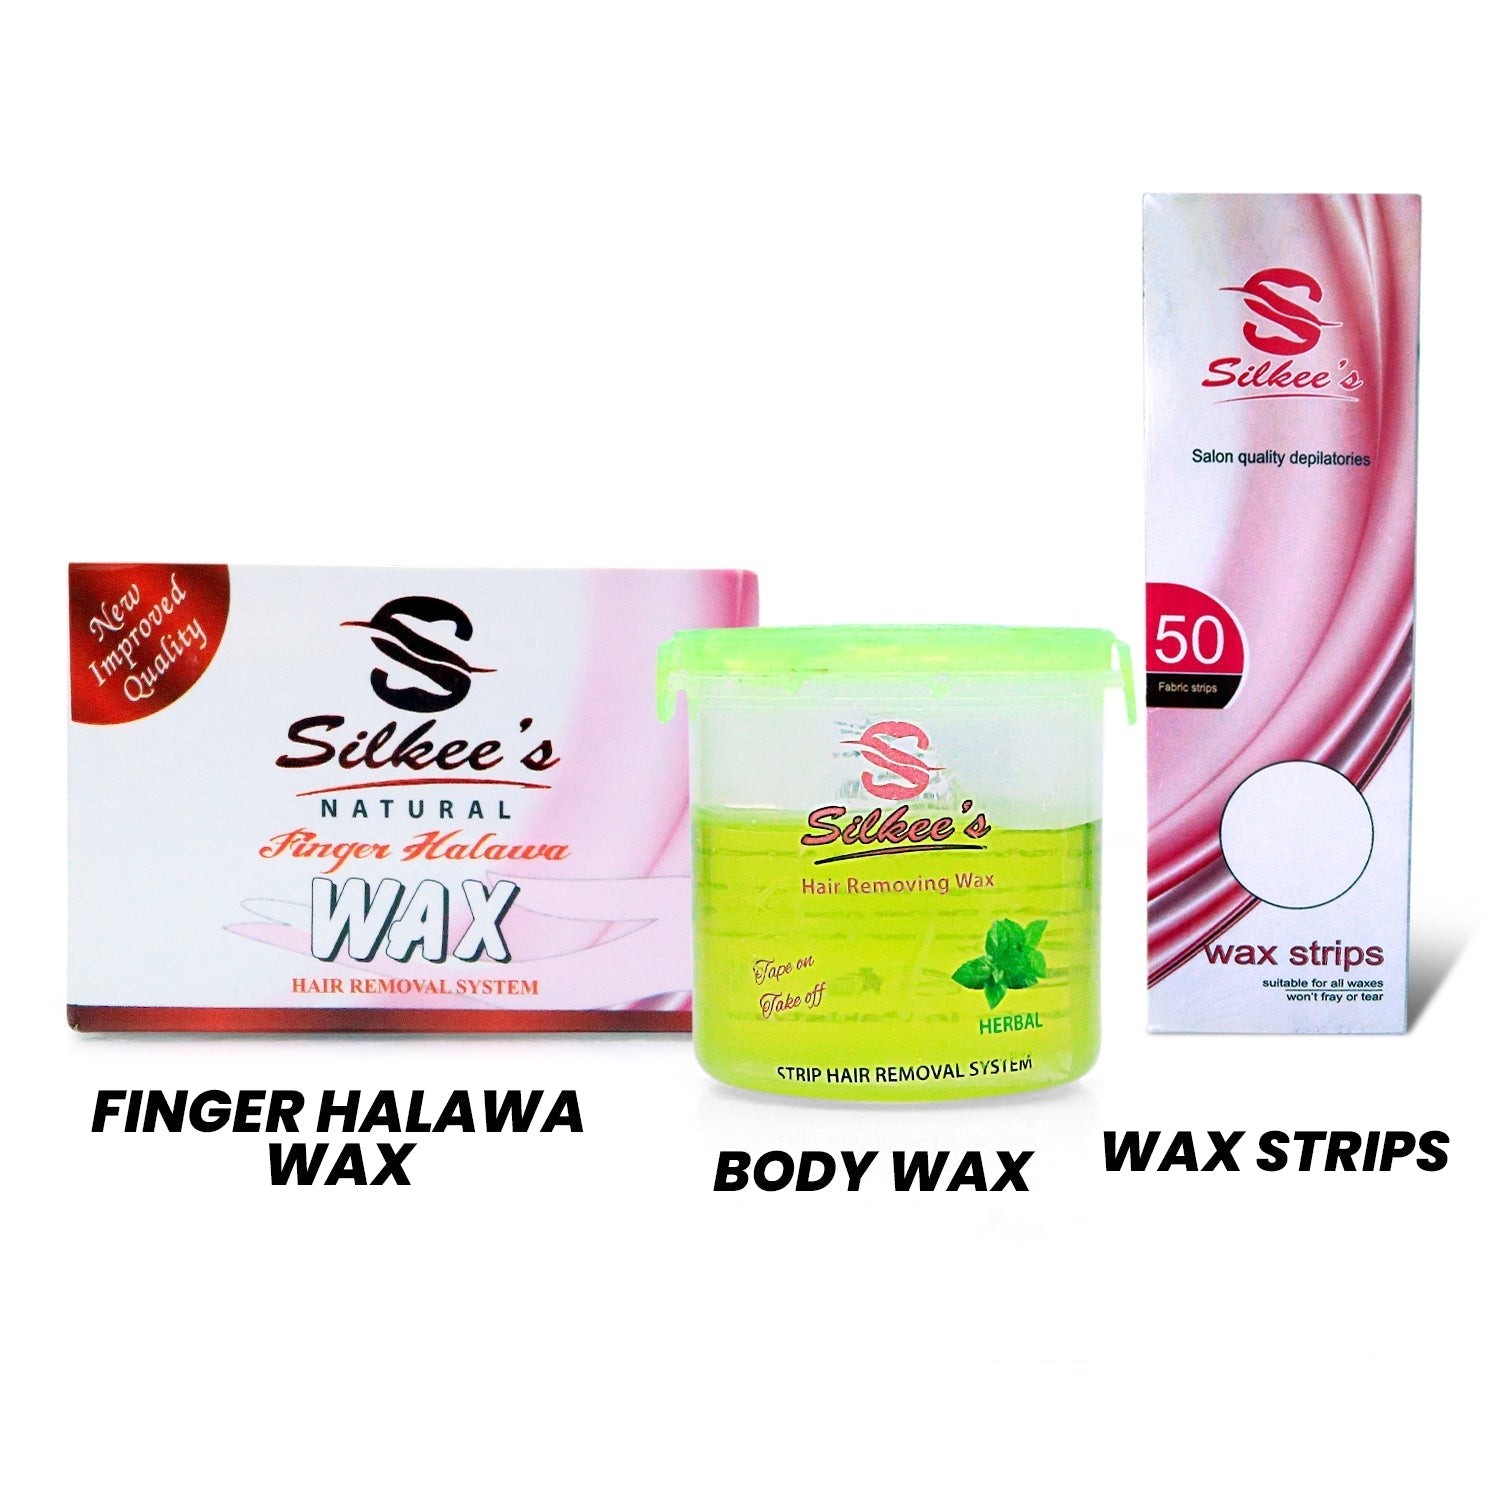 Natural Finger Halawa & Herbal Body Wax (175GM) With Wax Strips